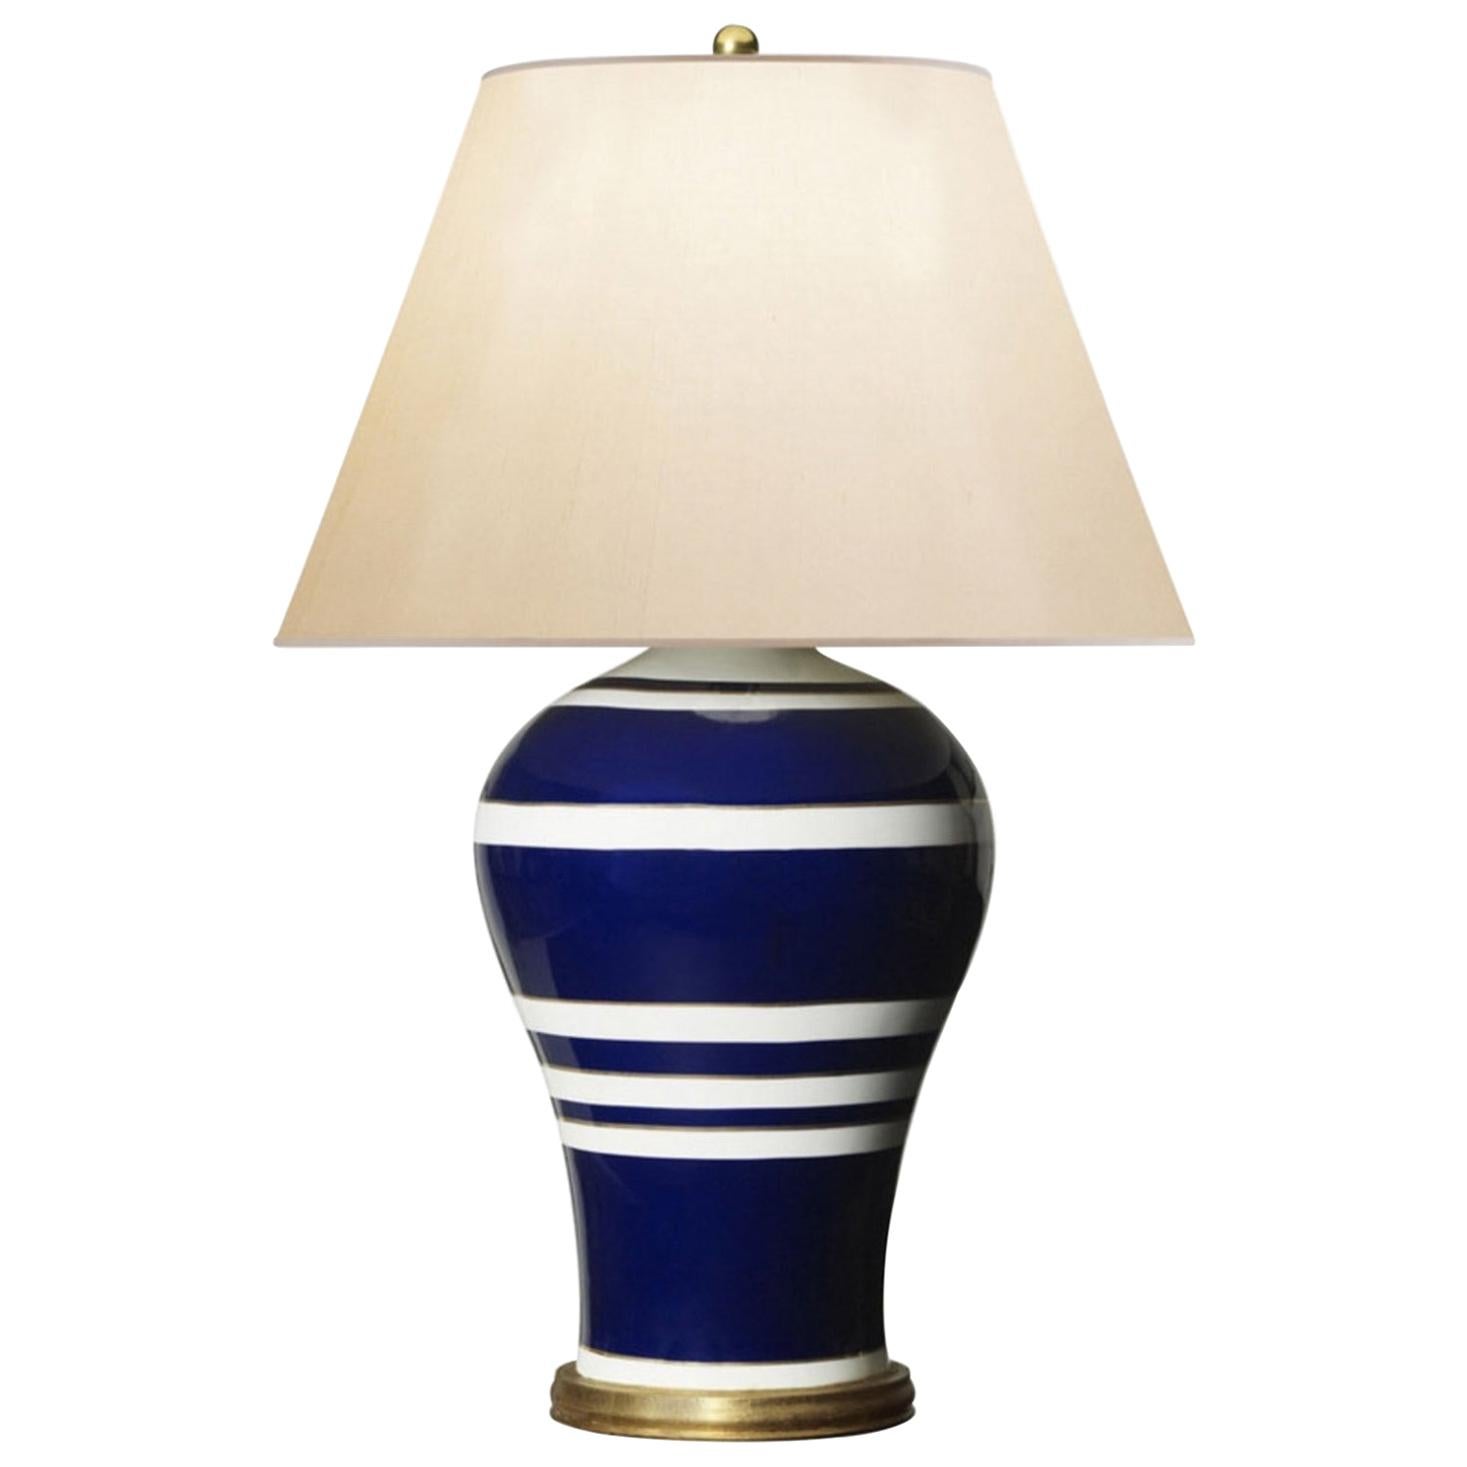 Ralph Lauren Table Lamp Glazed Porcelain Blue and White in Modern Style